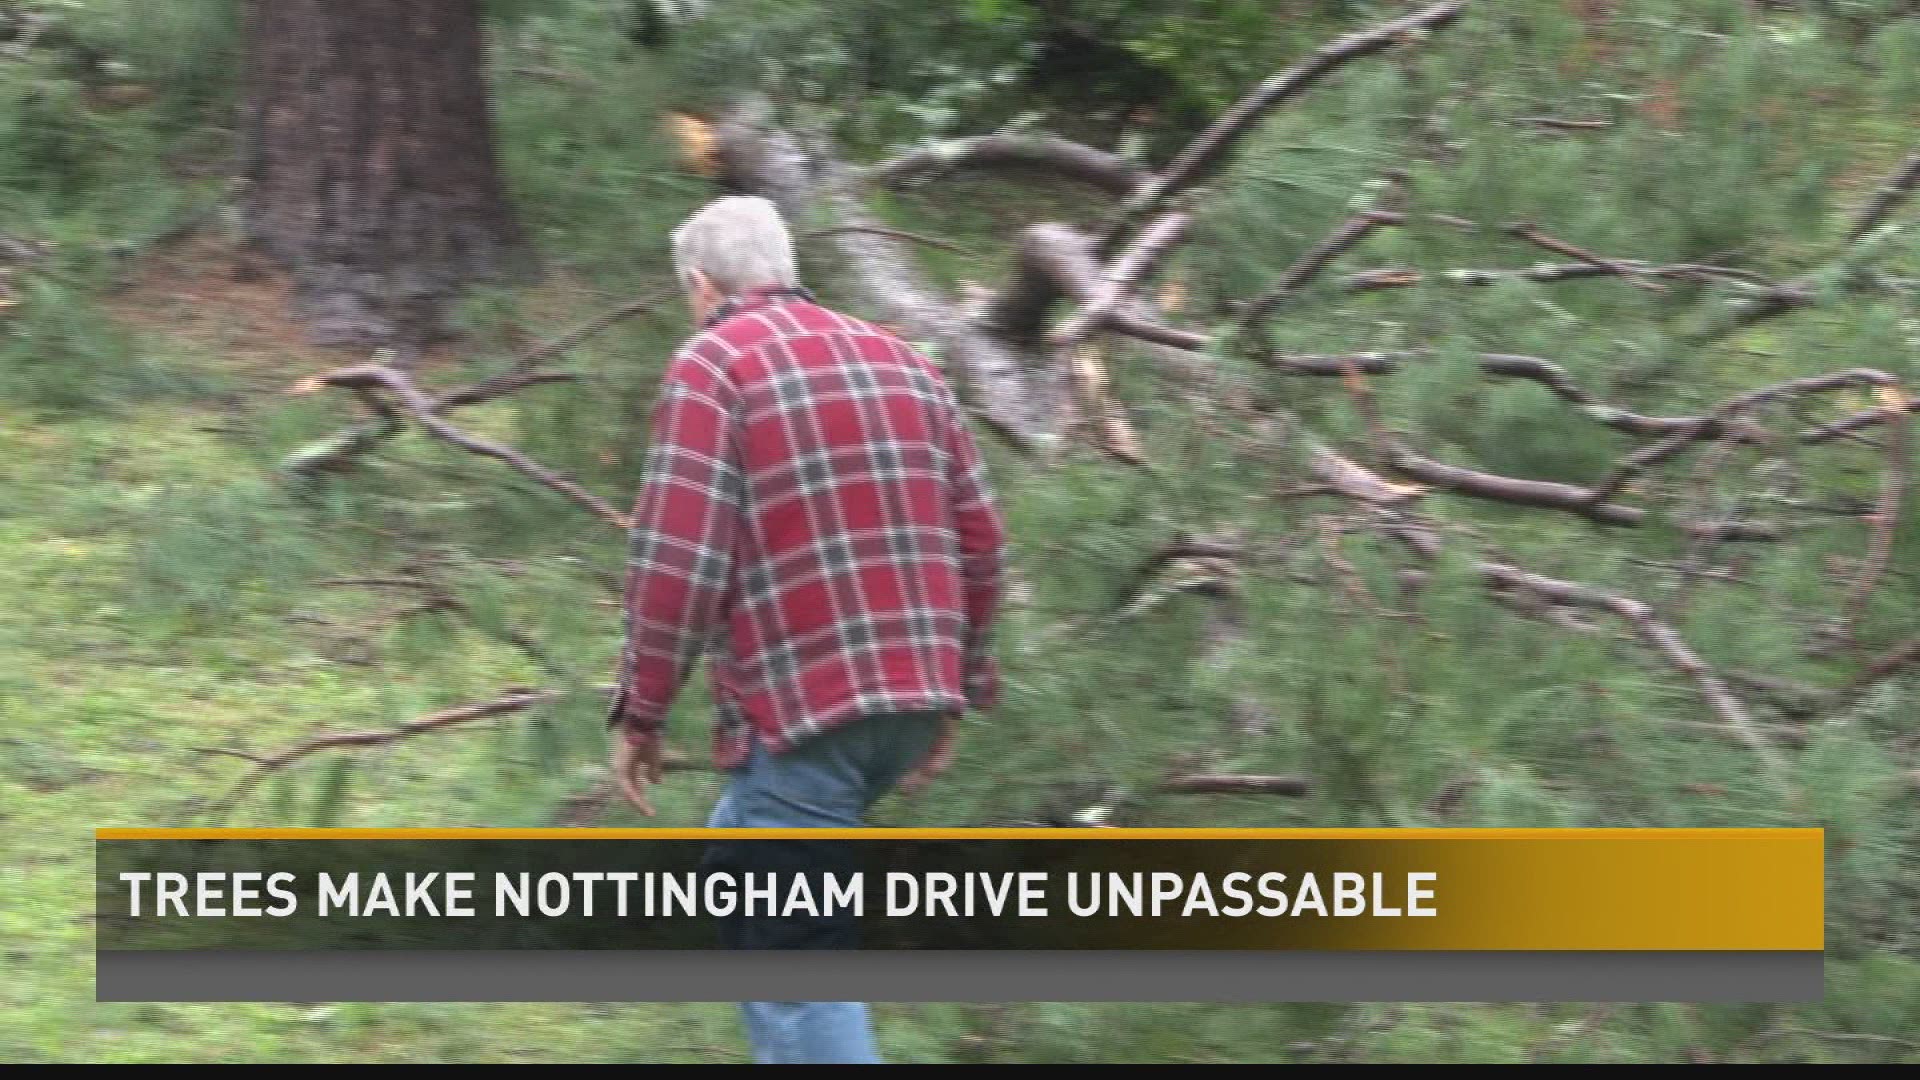 Nottingham Drive storm damage blocks in residents